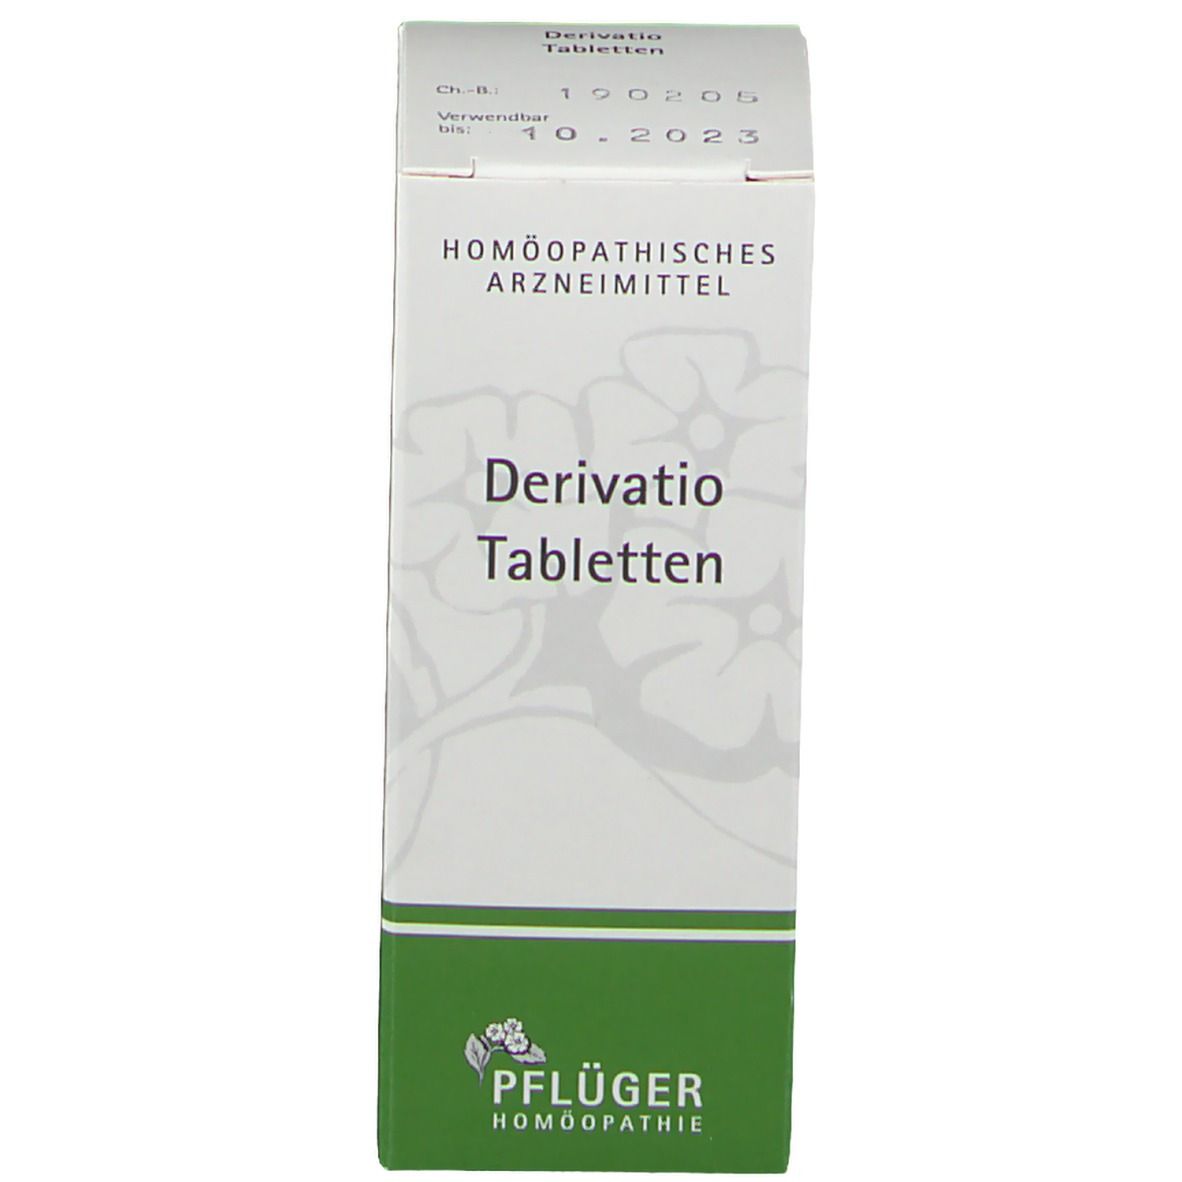 Derivatio Tabletten